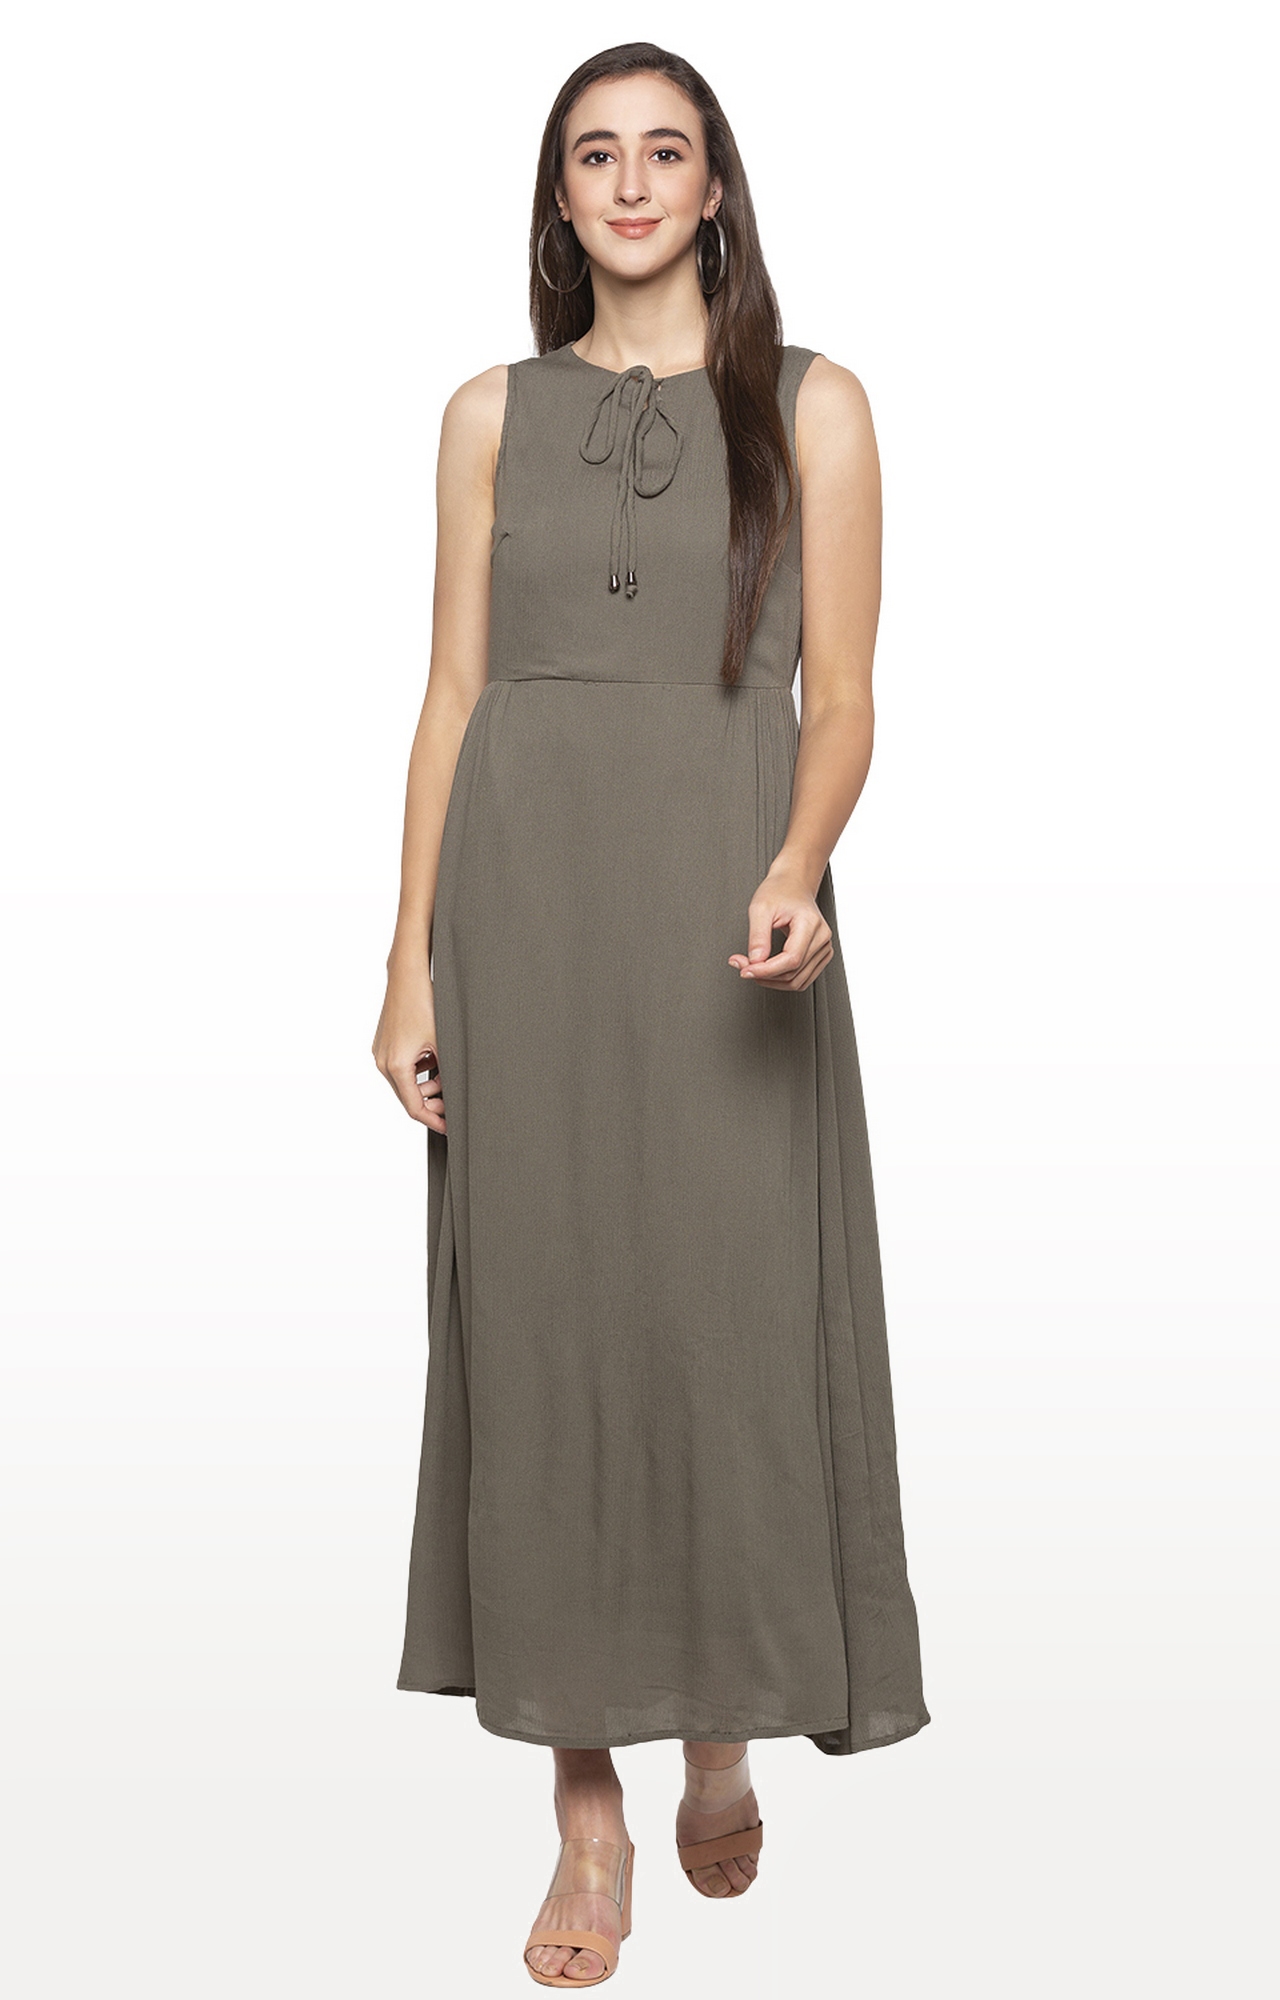 globus | Olive Solid Maxi Dress